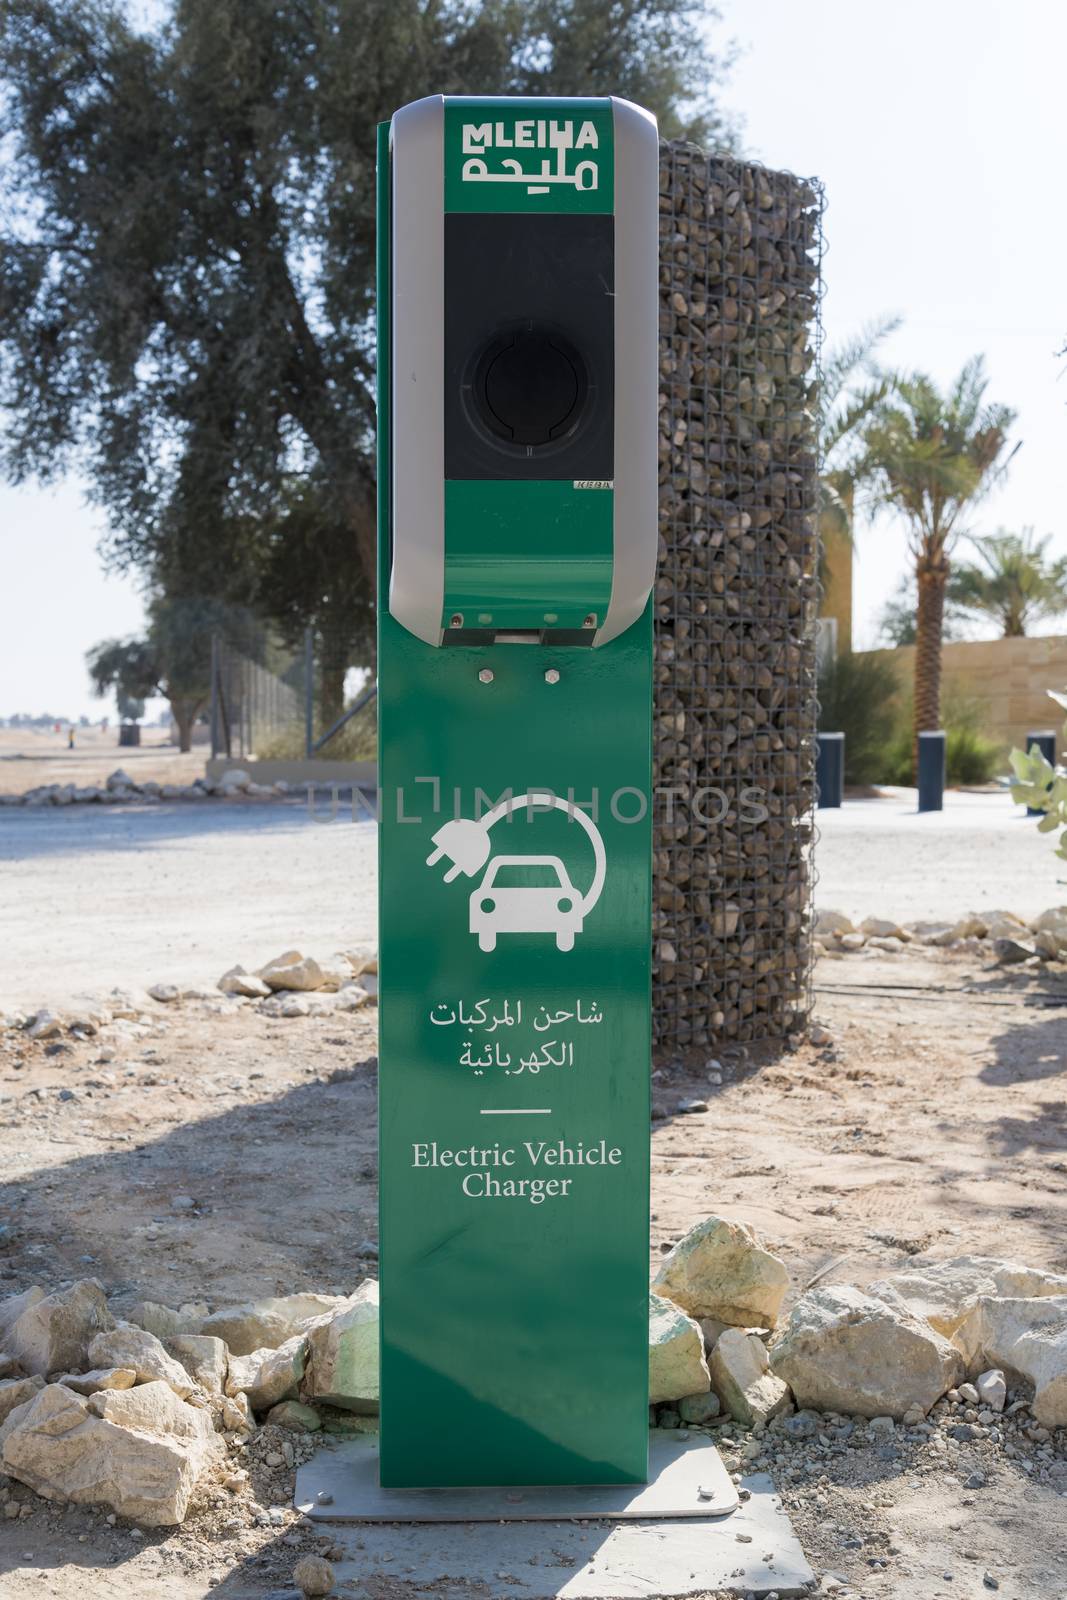 Electric vehicle charging station at the parking of Mleiha Museum, Sharjah, United Arab Emirates